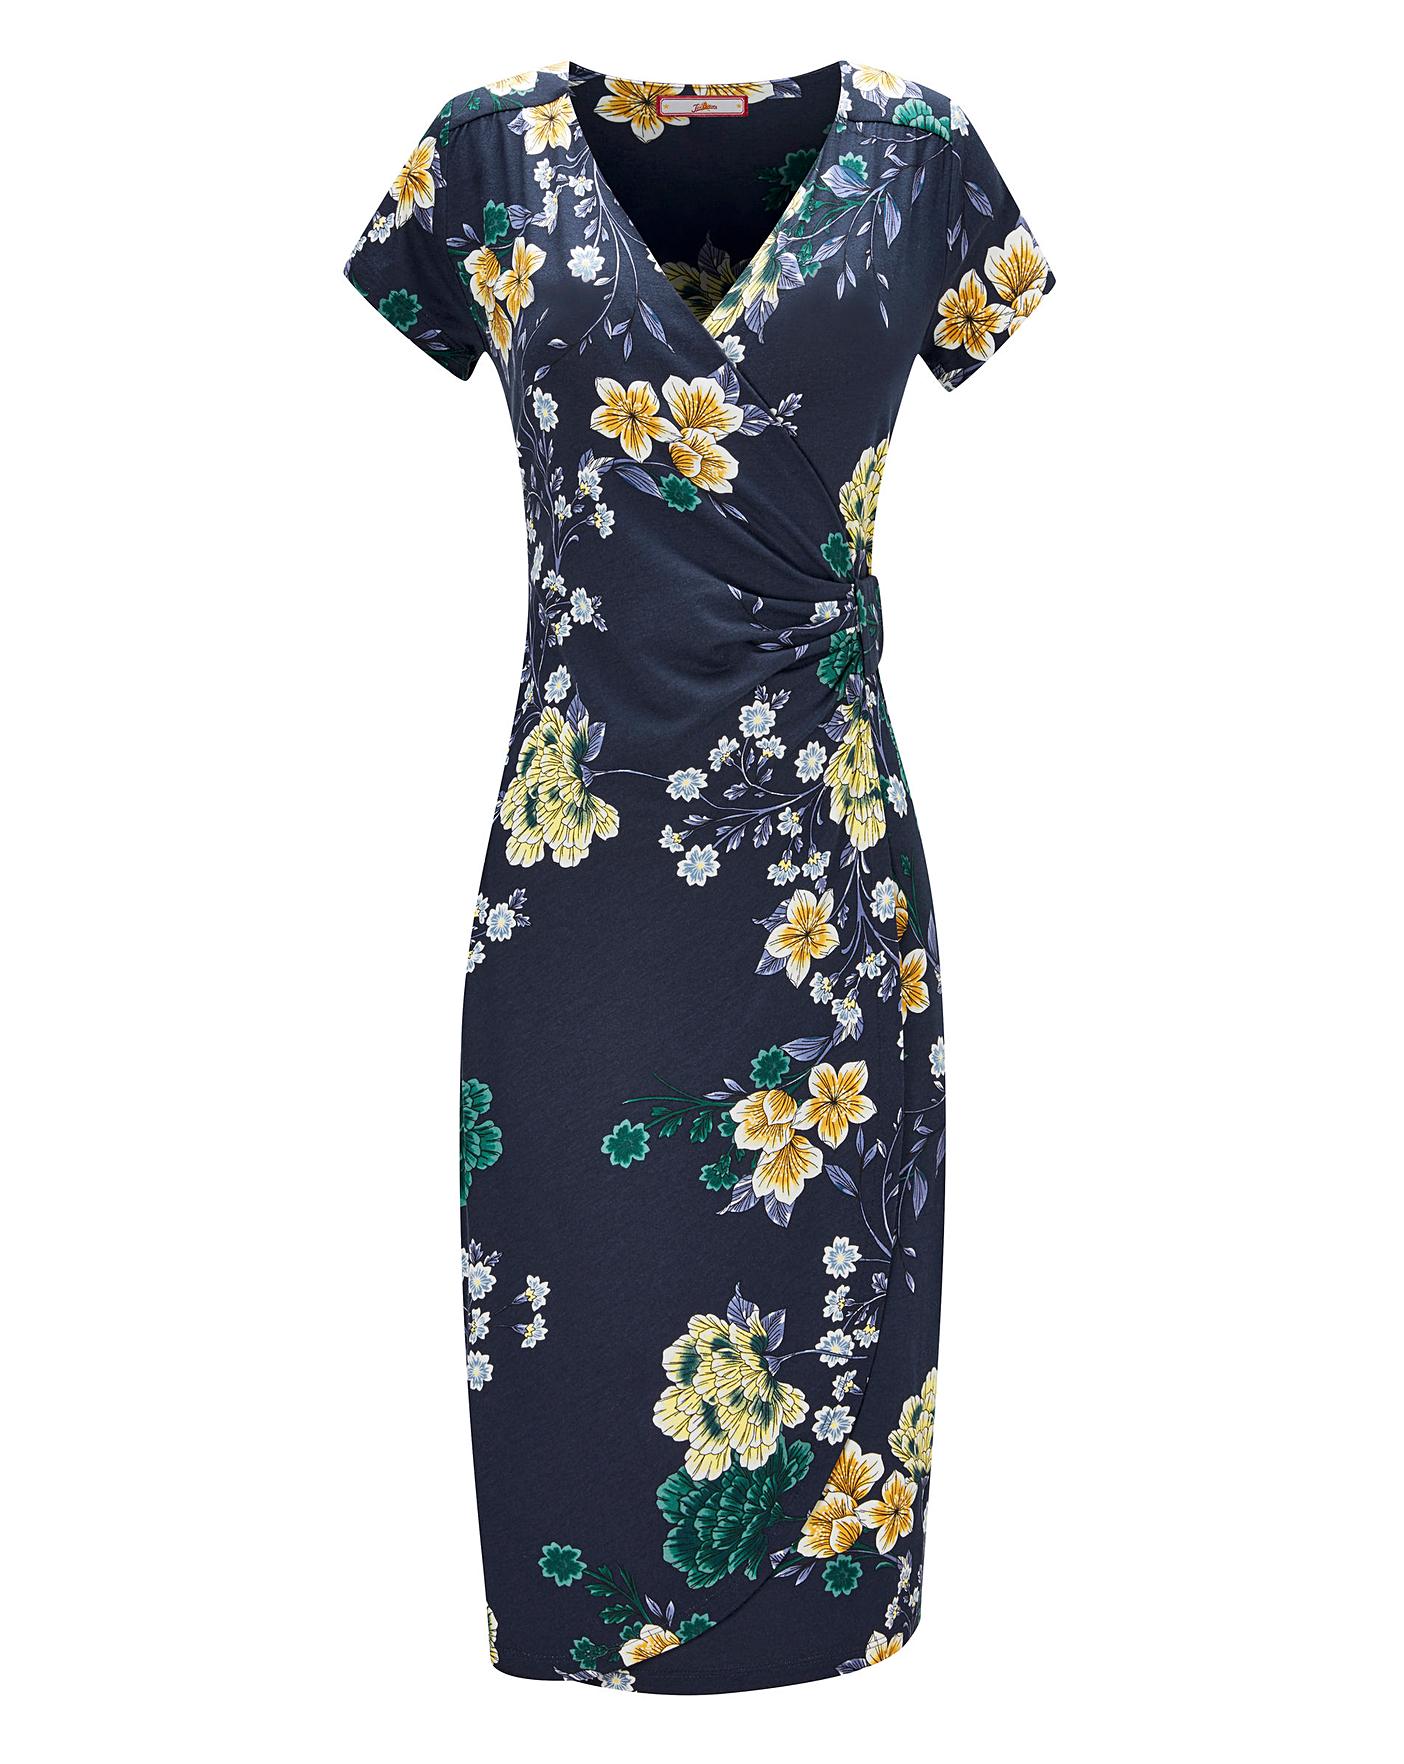 Joe Browns Floral Print Dress | Simply Be